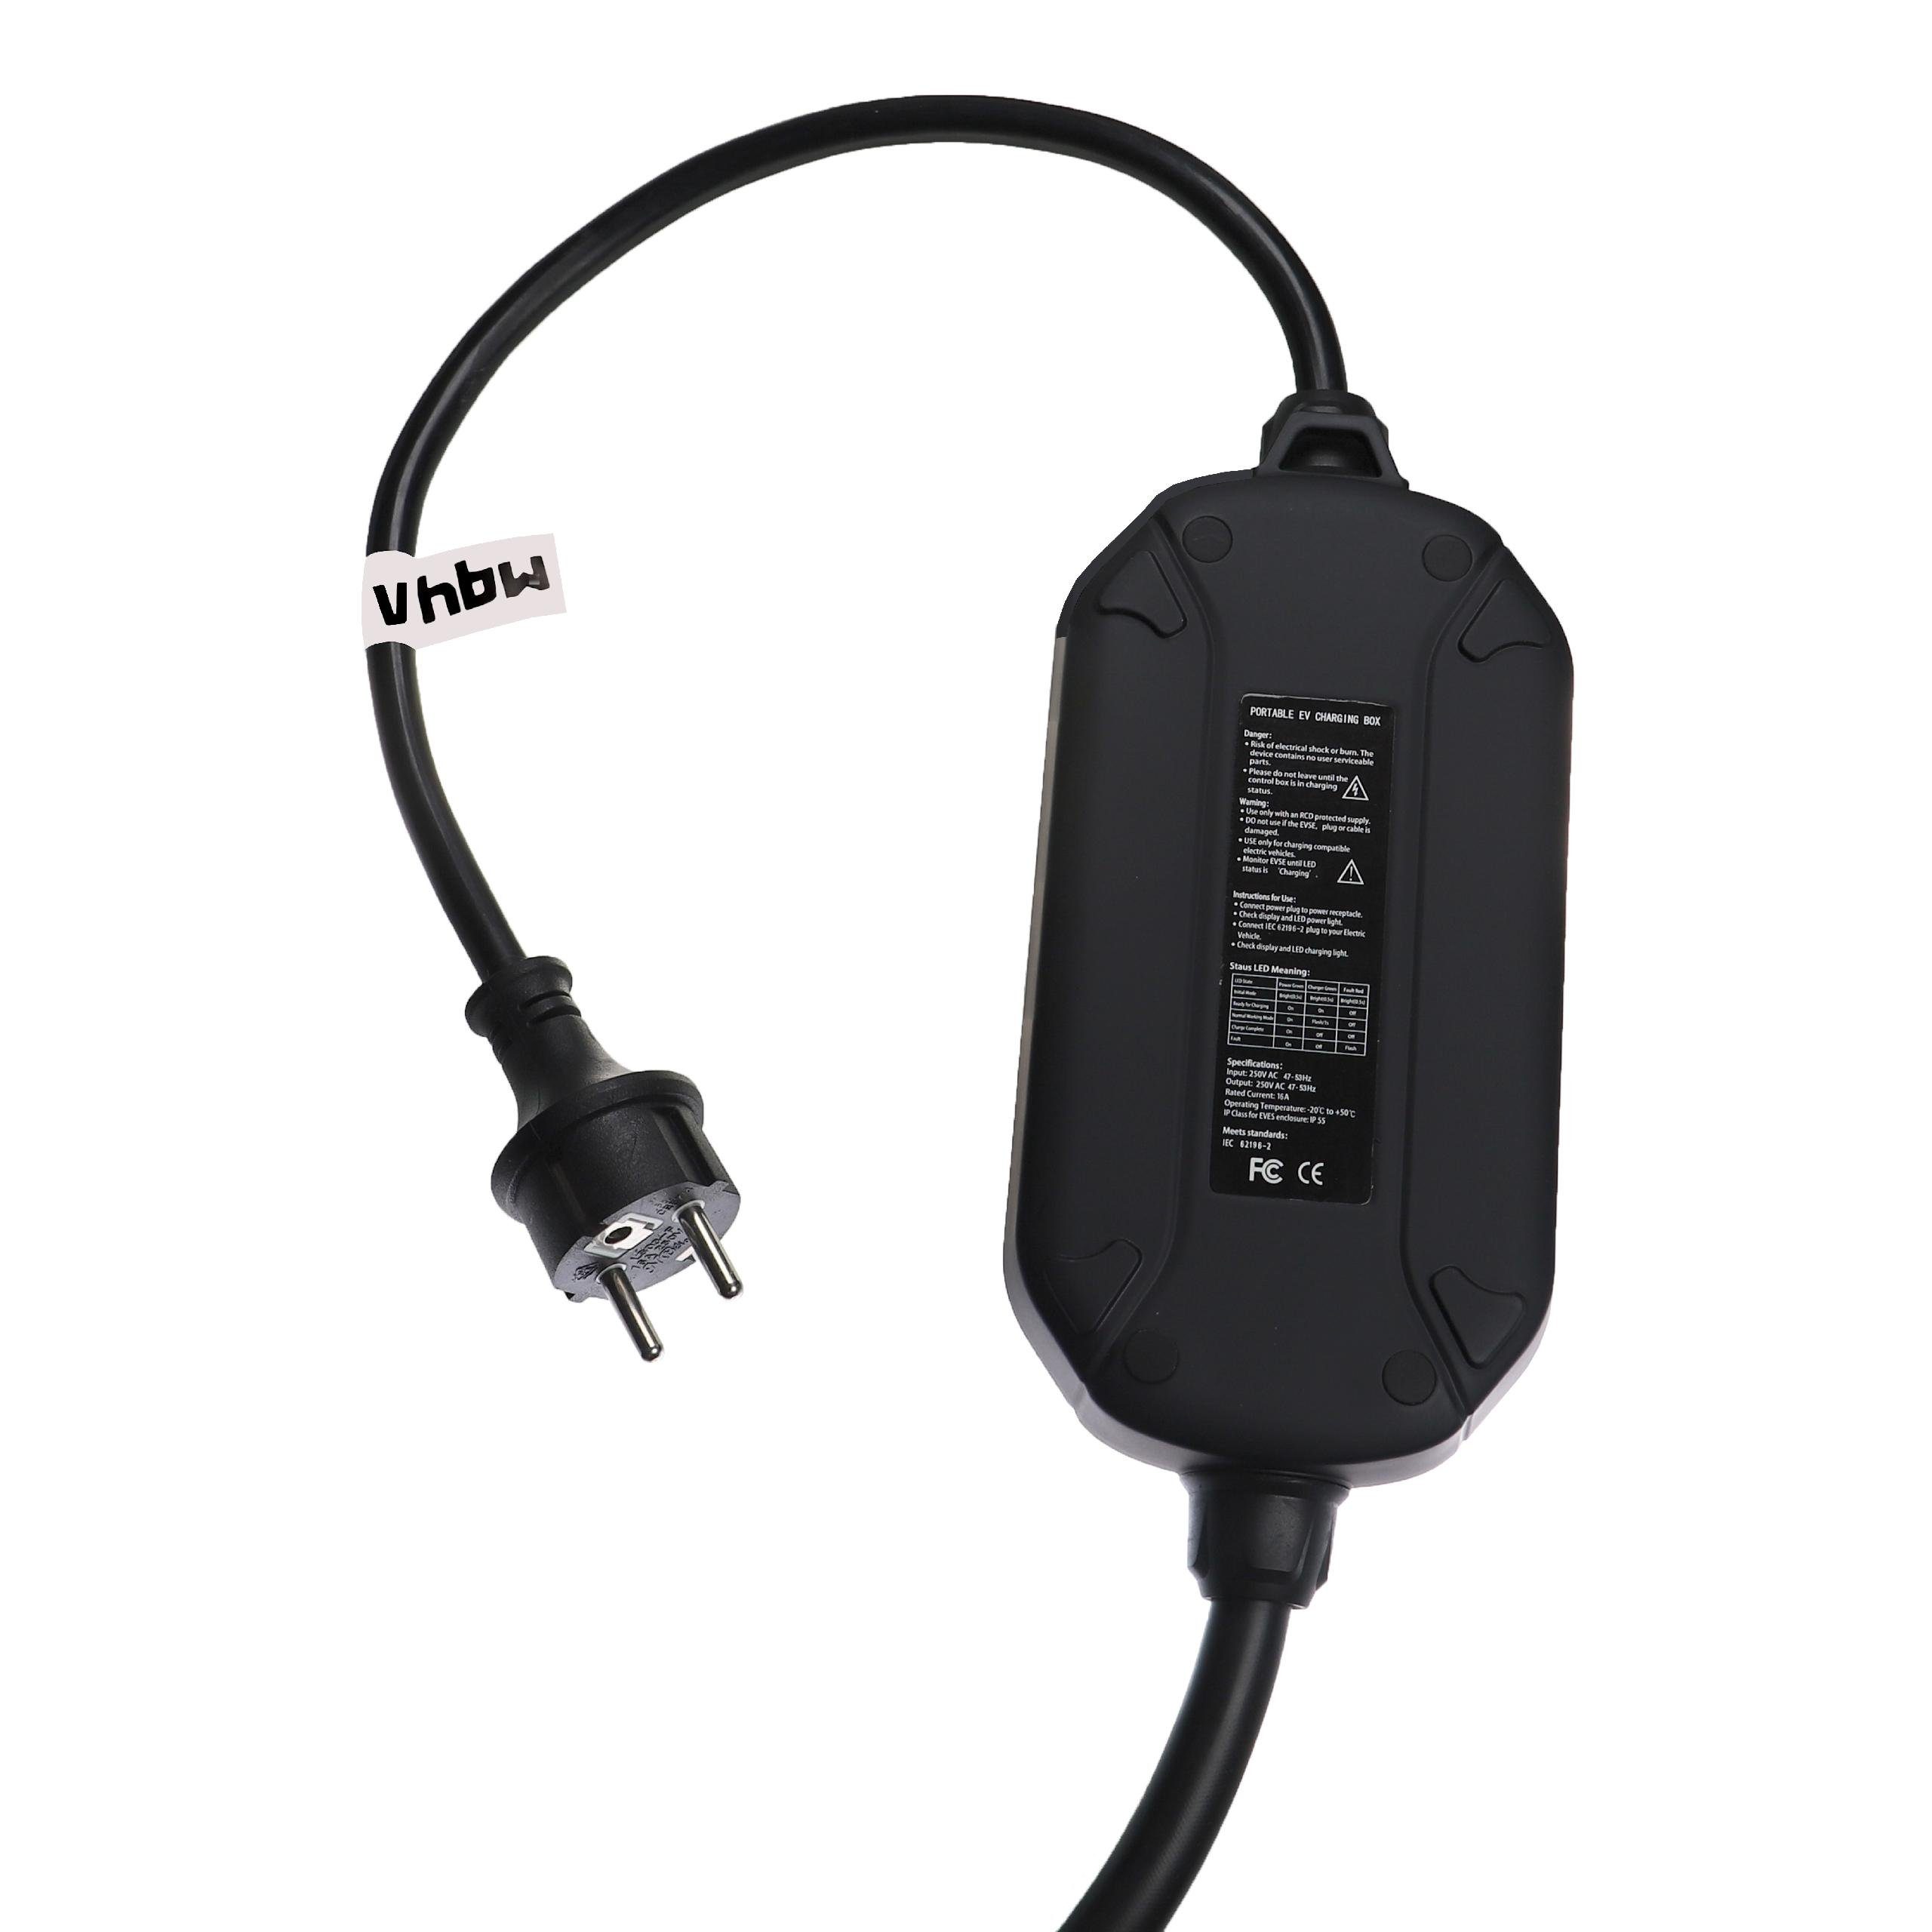 / vhbw EQ Elektro-Kabel Plug-in-Hybrid für fortwo passend Elektroauto Smart